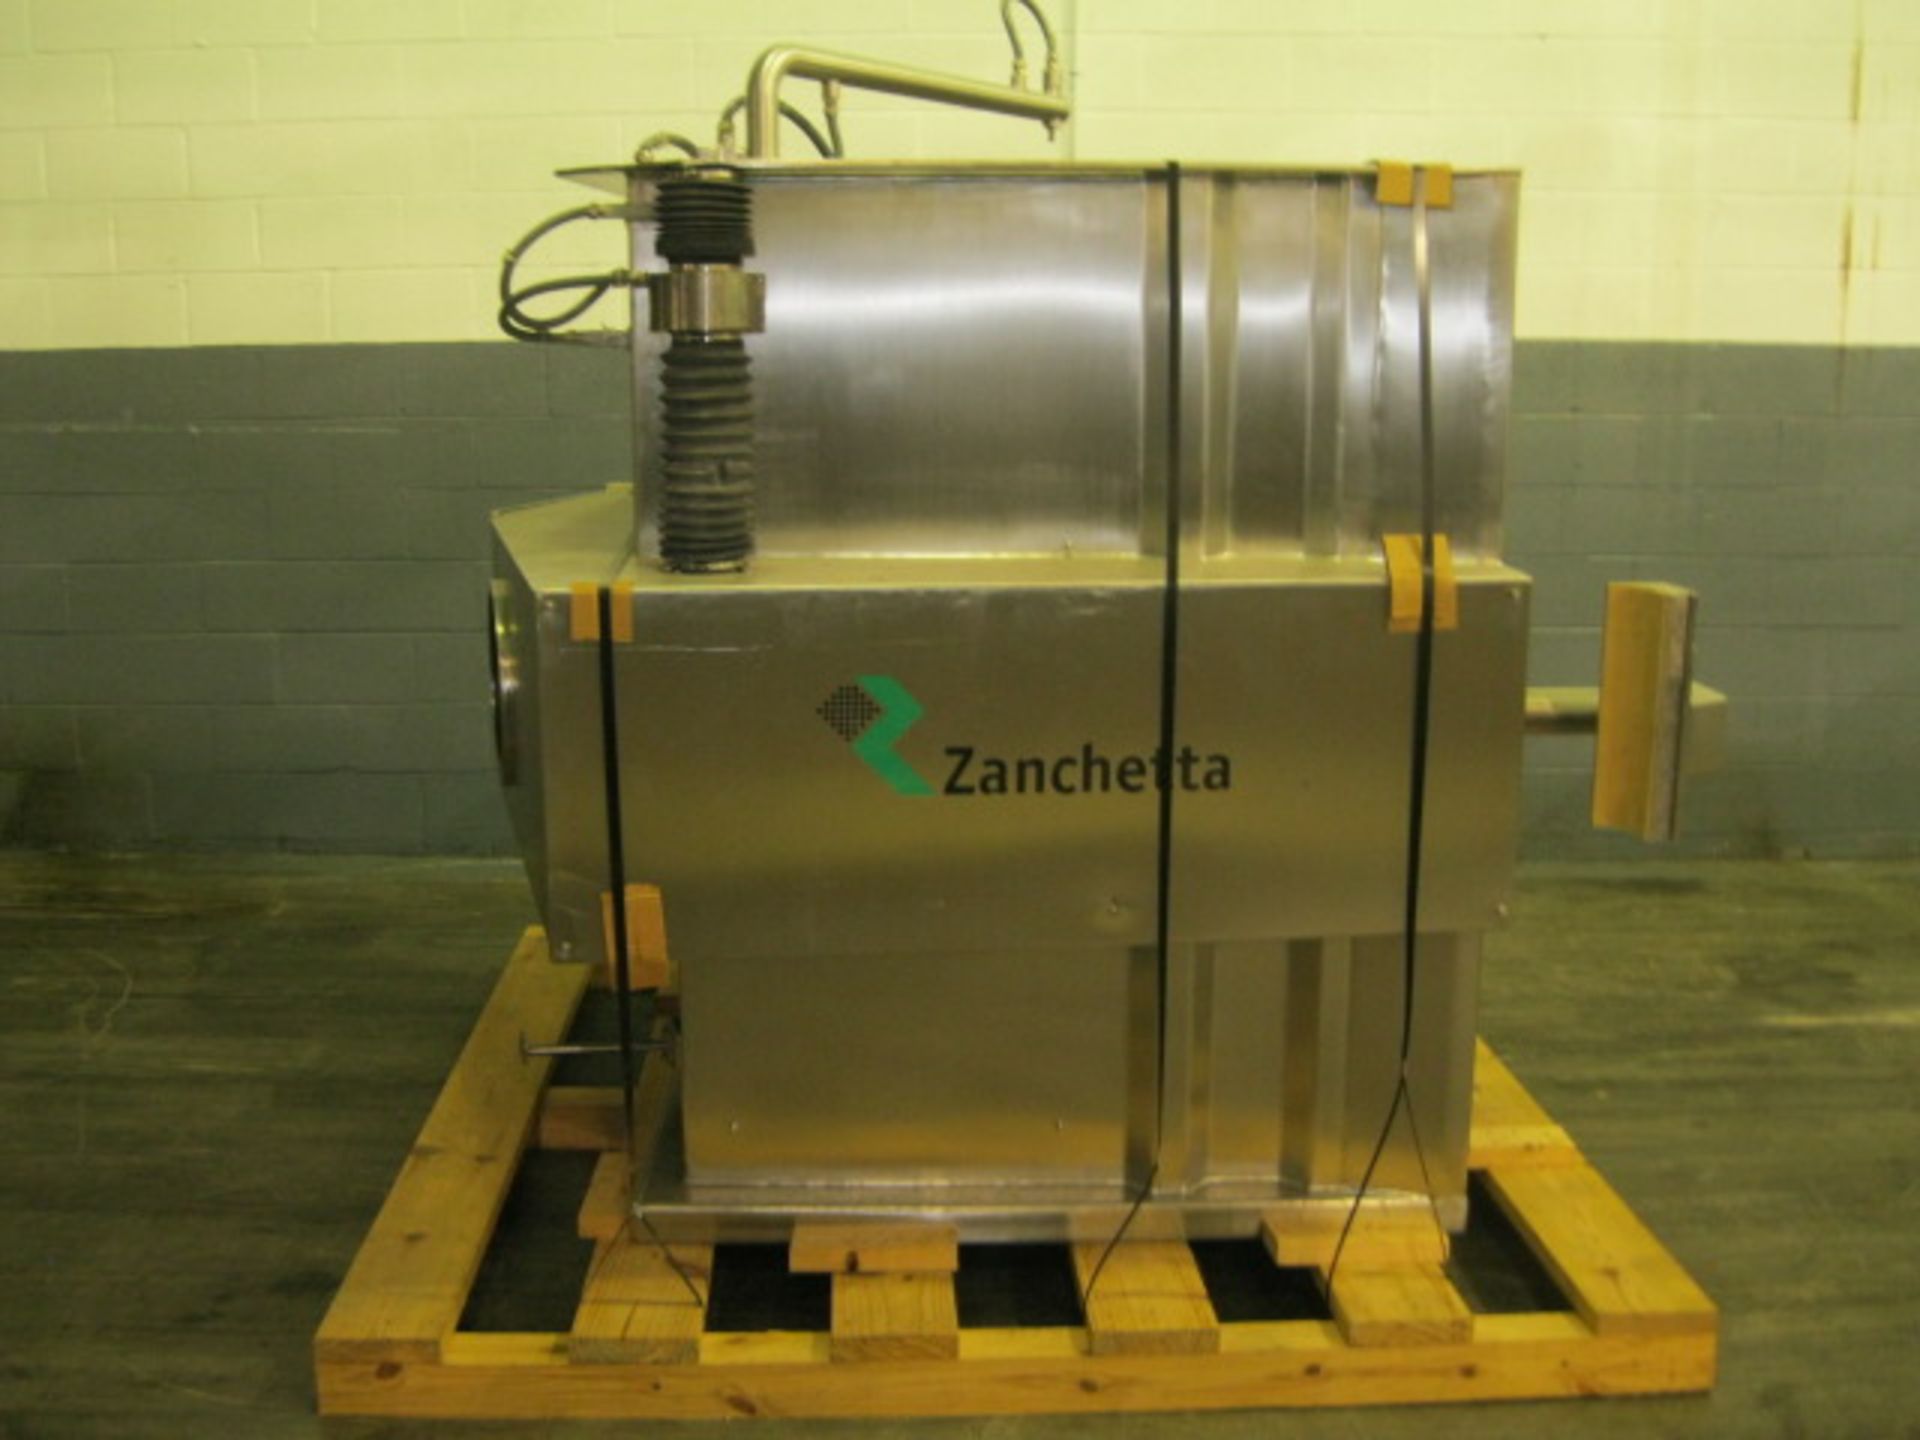 Zanchetta (IMA) Bin Blender, Model CANGURO TUMBLER, Model 500 FS, Series 2000, stainless steel. Bin